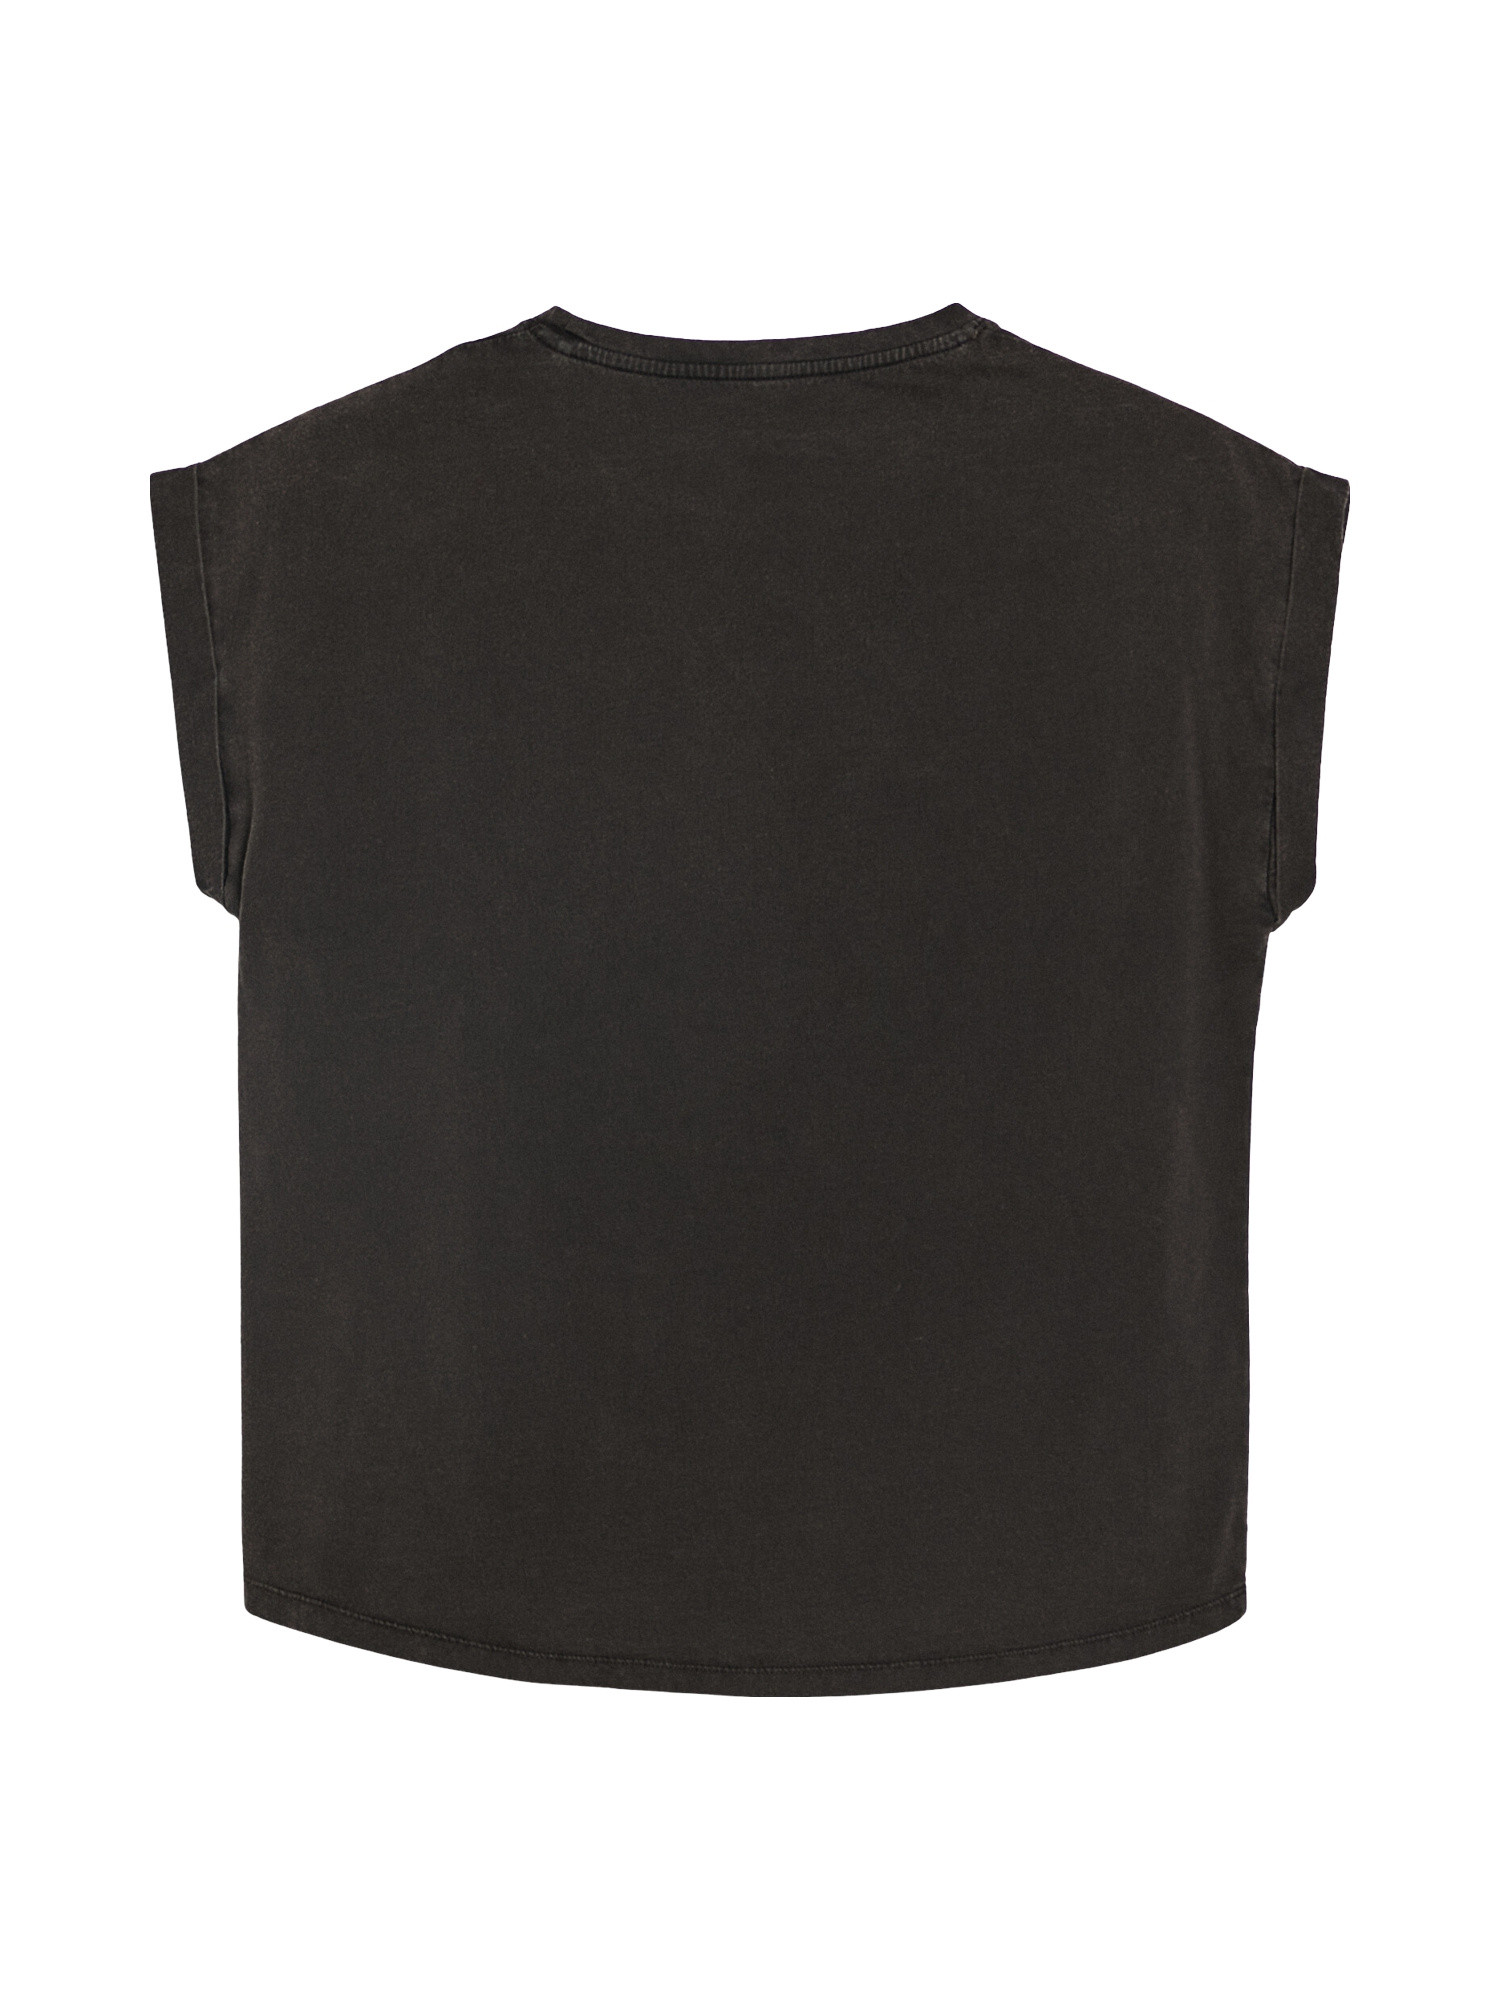 Pepe Jeans - Cotton logo T-shirt, Black, large image number 1